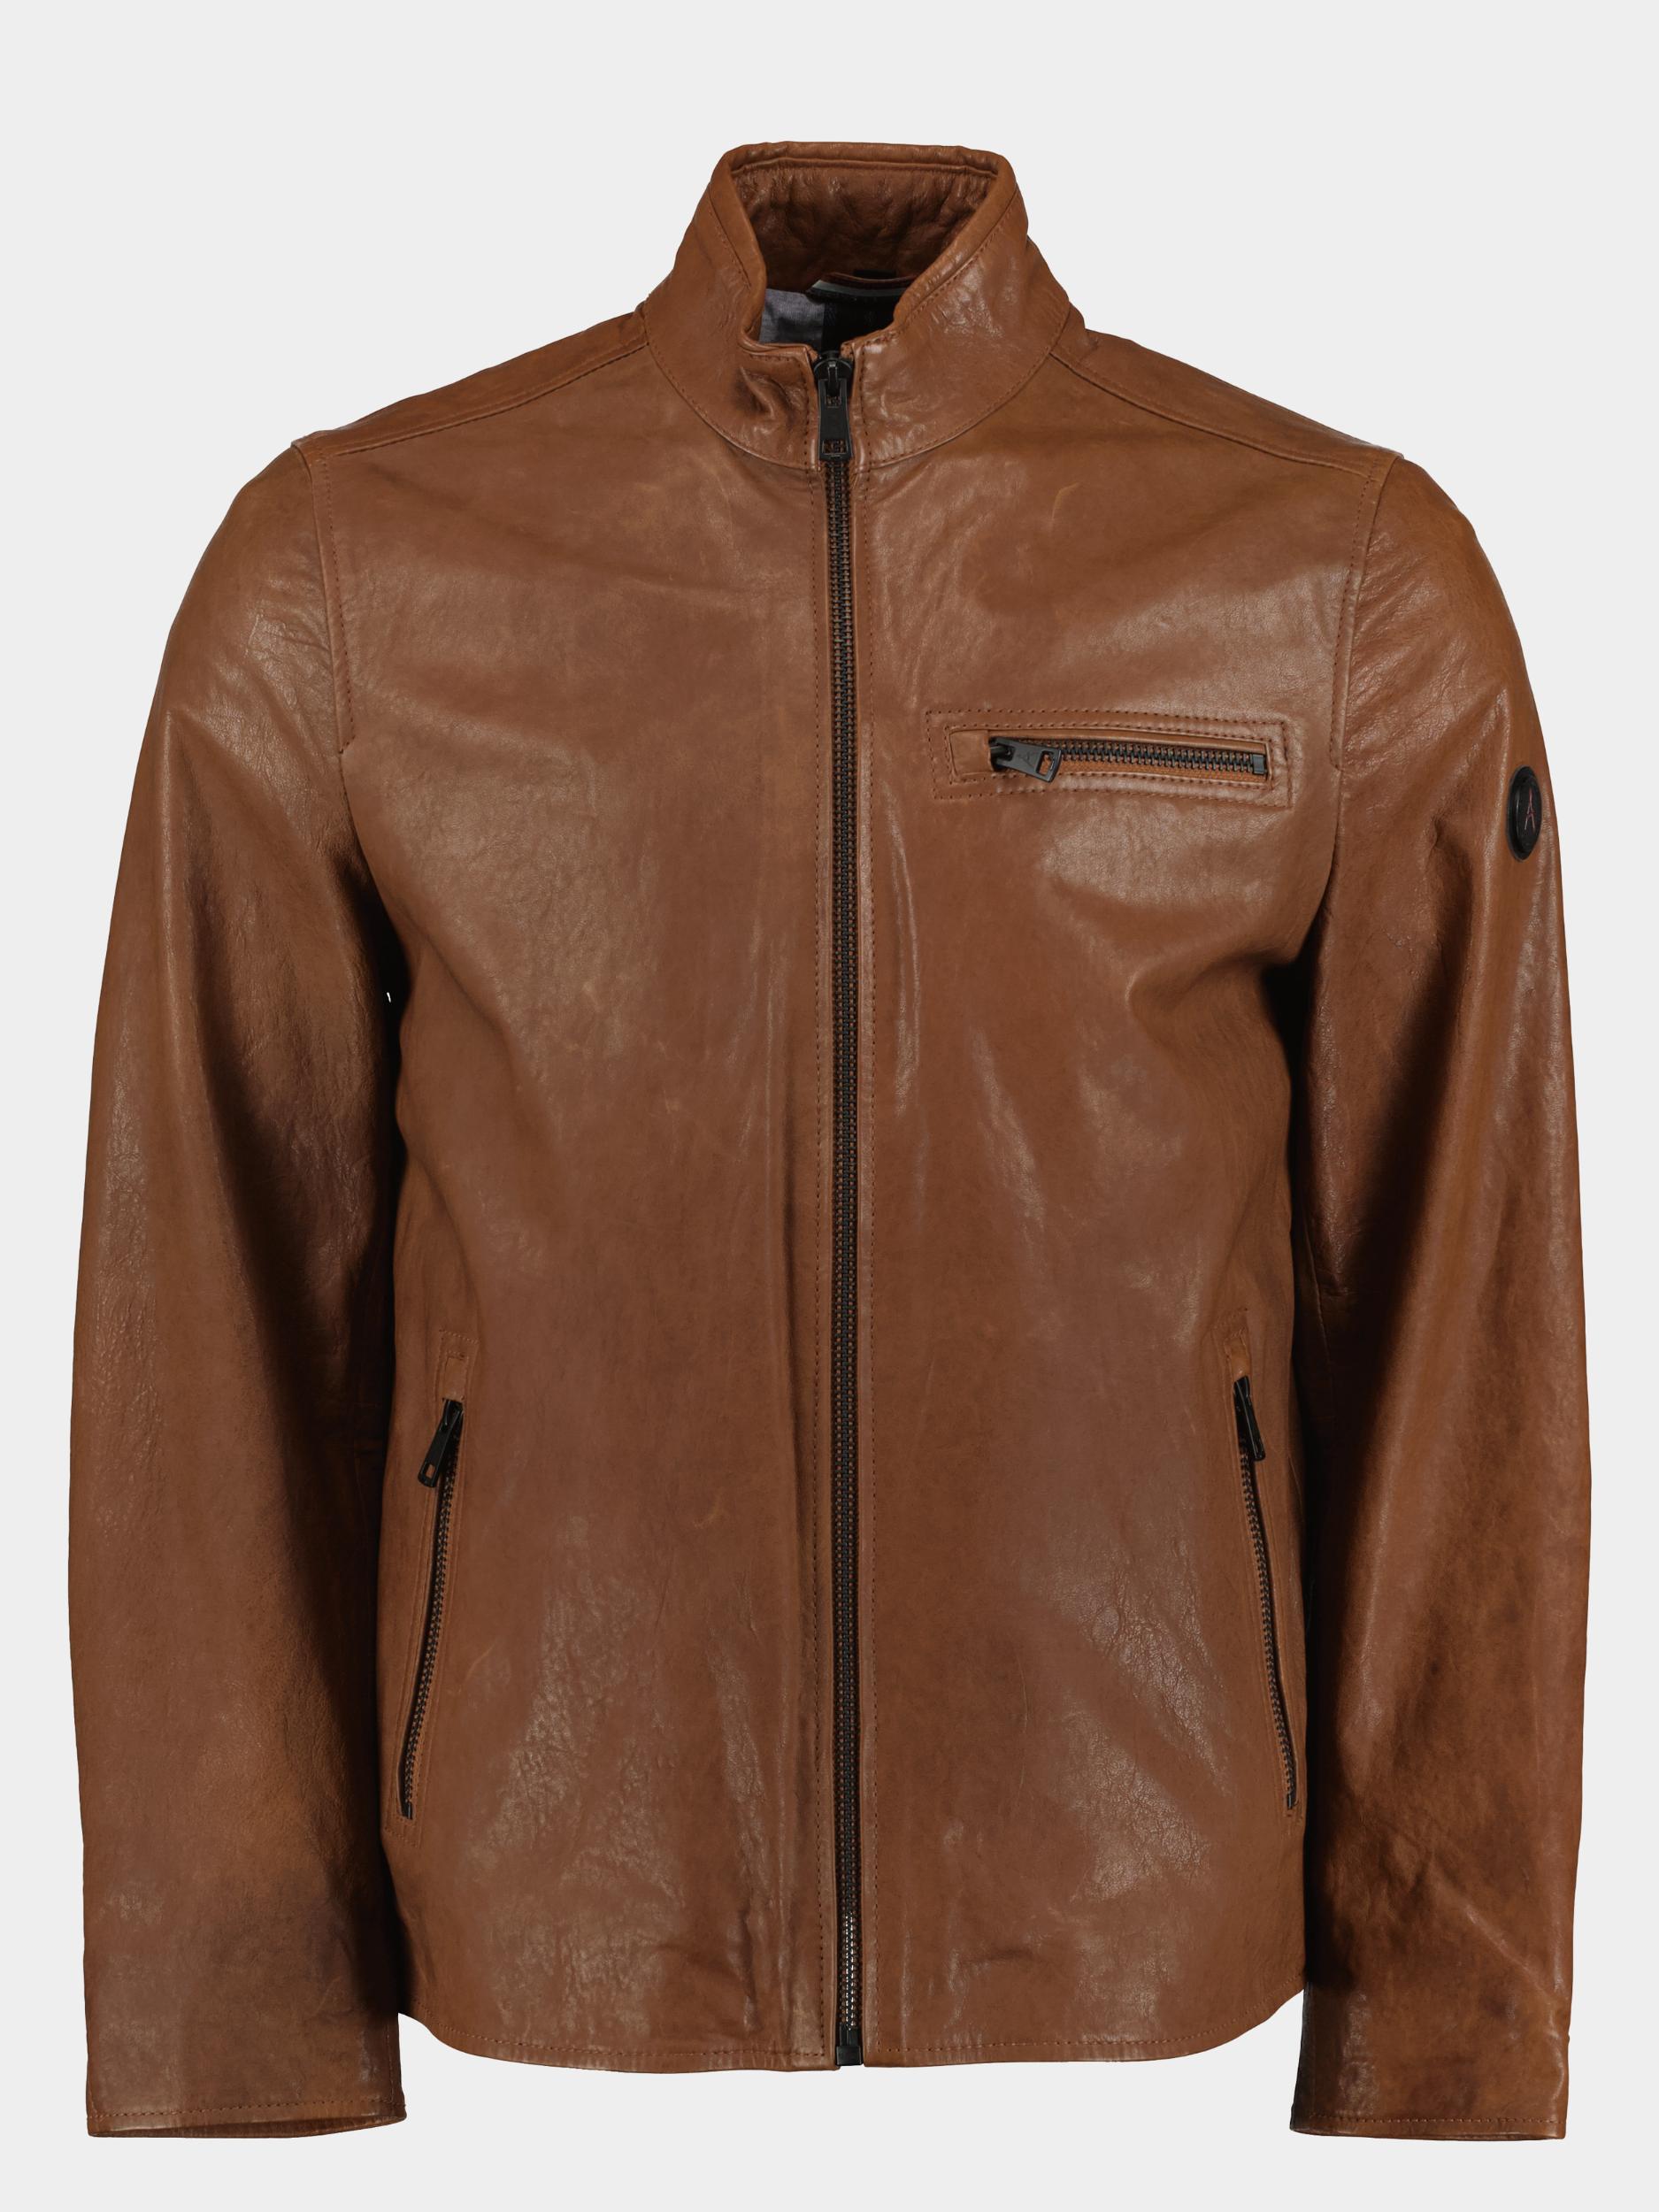 Donders 1860 Lederen jack Bruin Distrixx Leather Jacket 52382/461